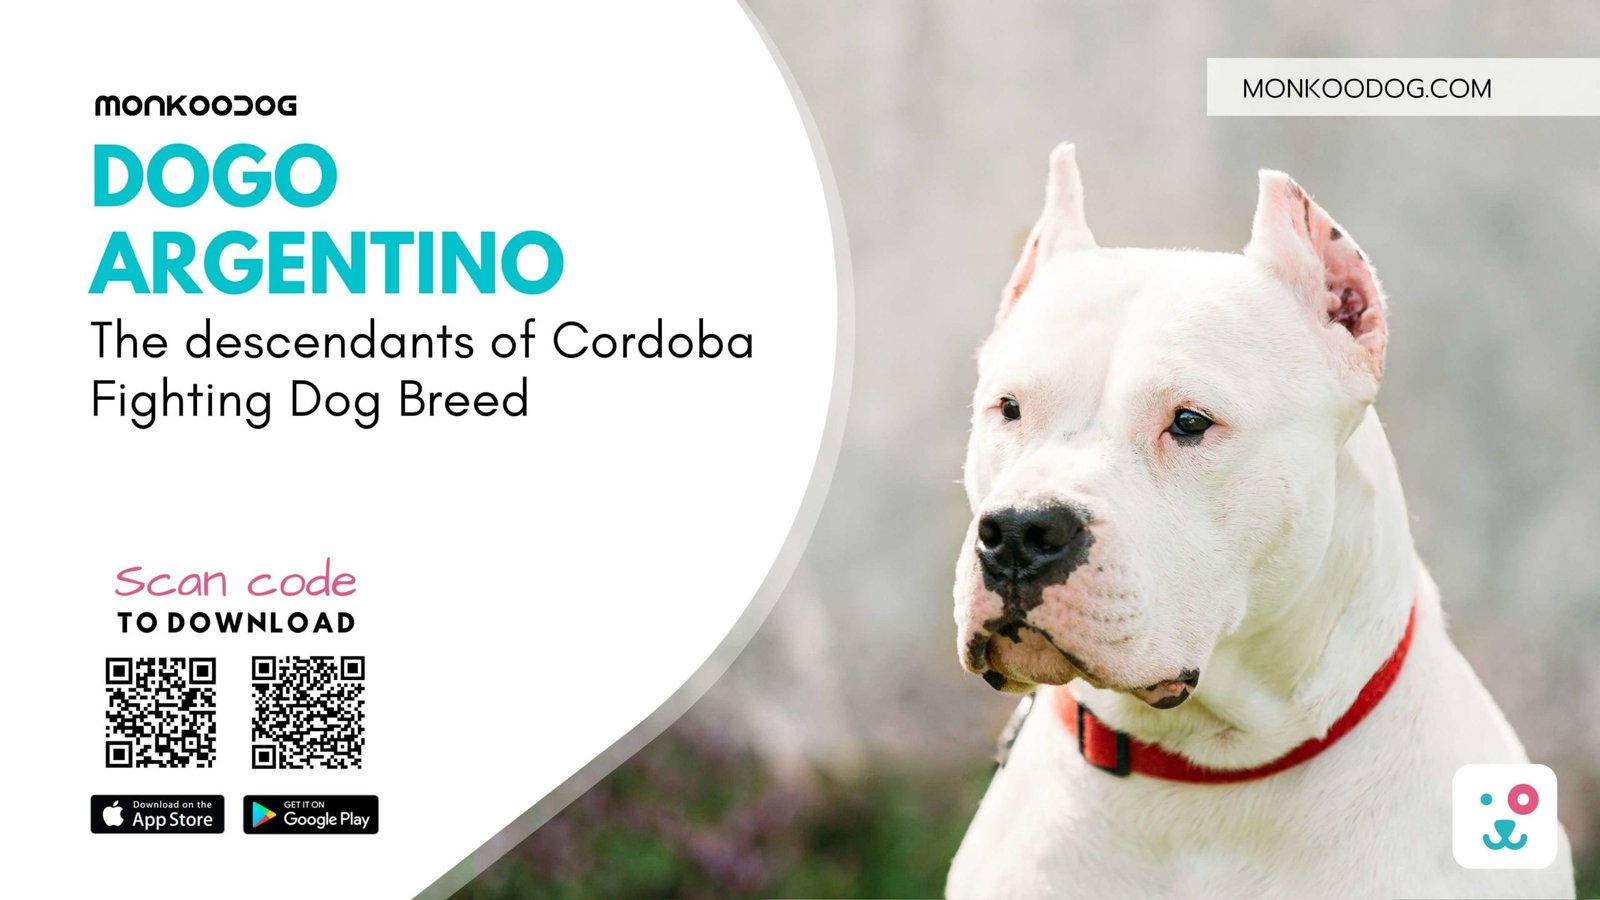 Dogo Argentino The descendants of Cordoba Fighting Dog Breed